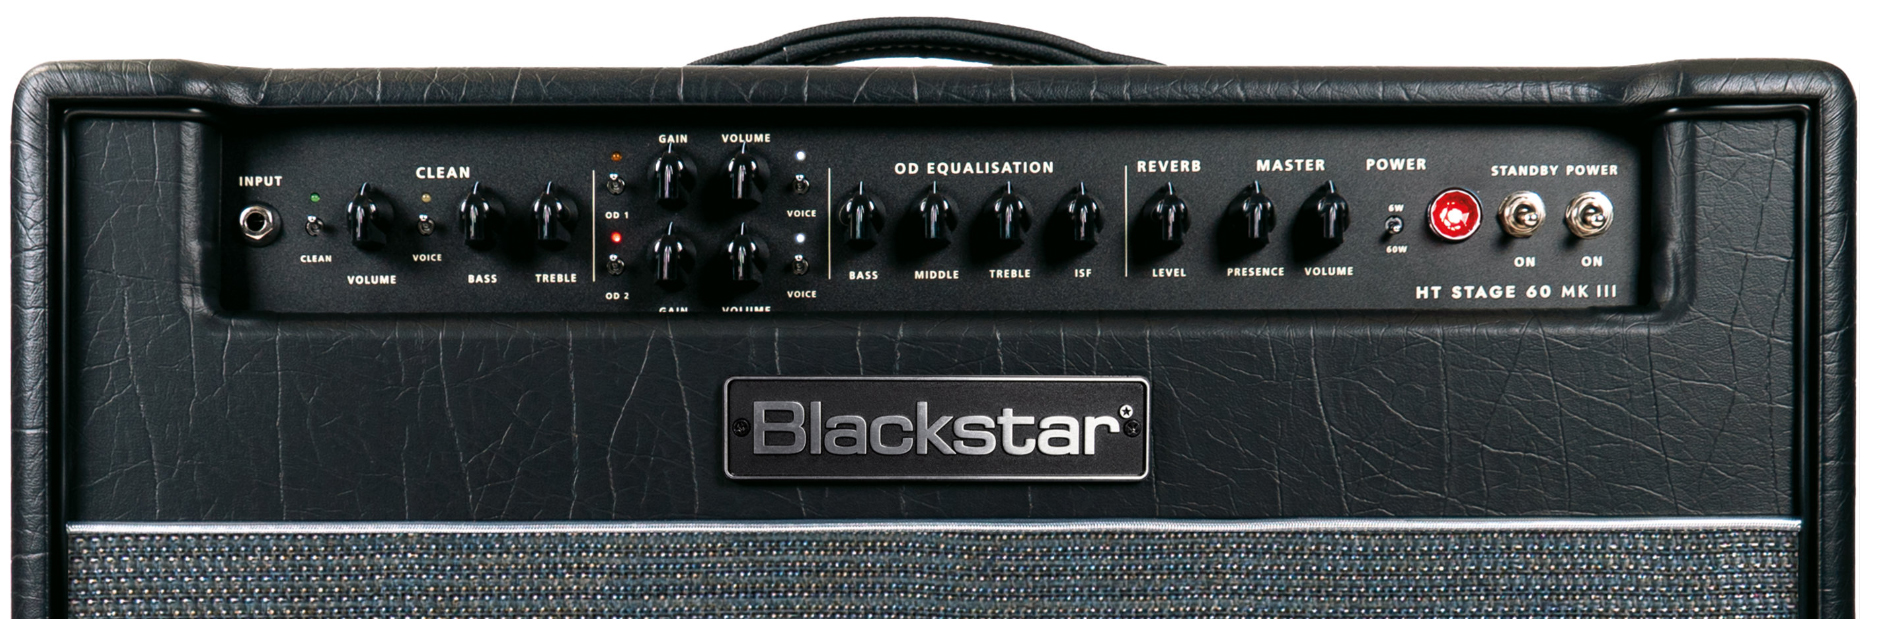 Blackstar Ht Venue Stage 60 112 Mkiii 60w 1x12 El34 - Ampli Guitare Électrique Combo - Variation 3